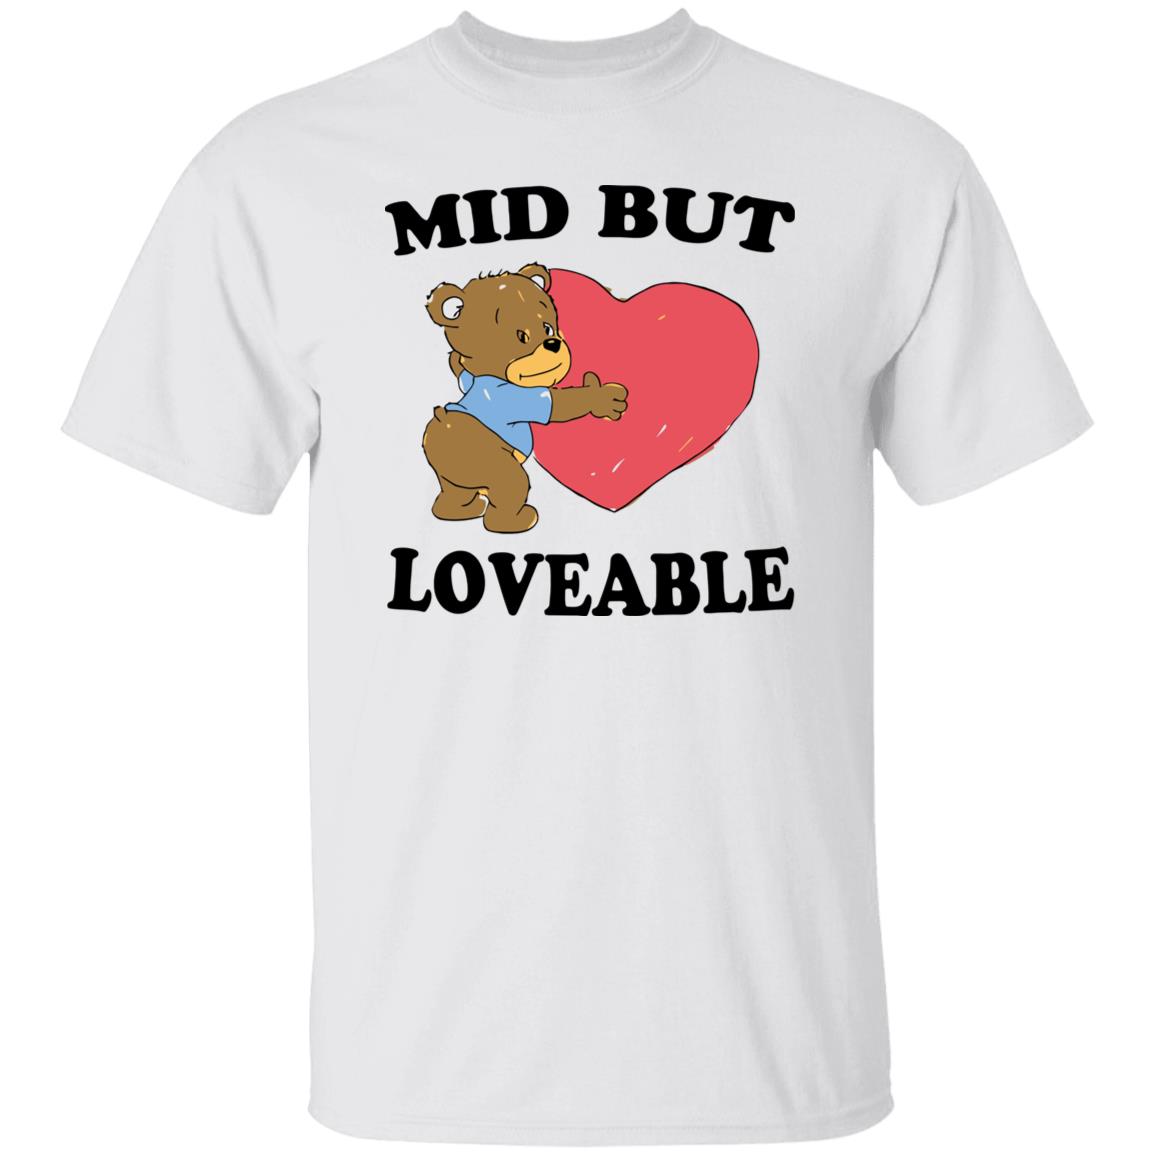 Bear mid but loveable shirt